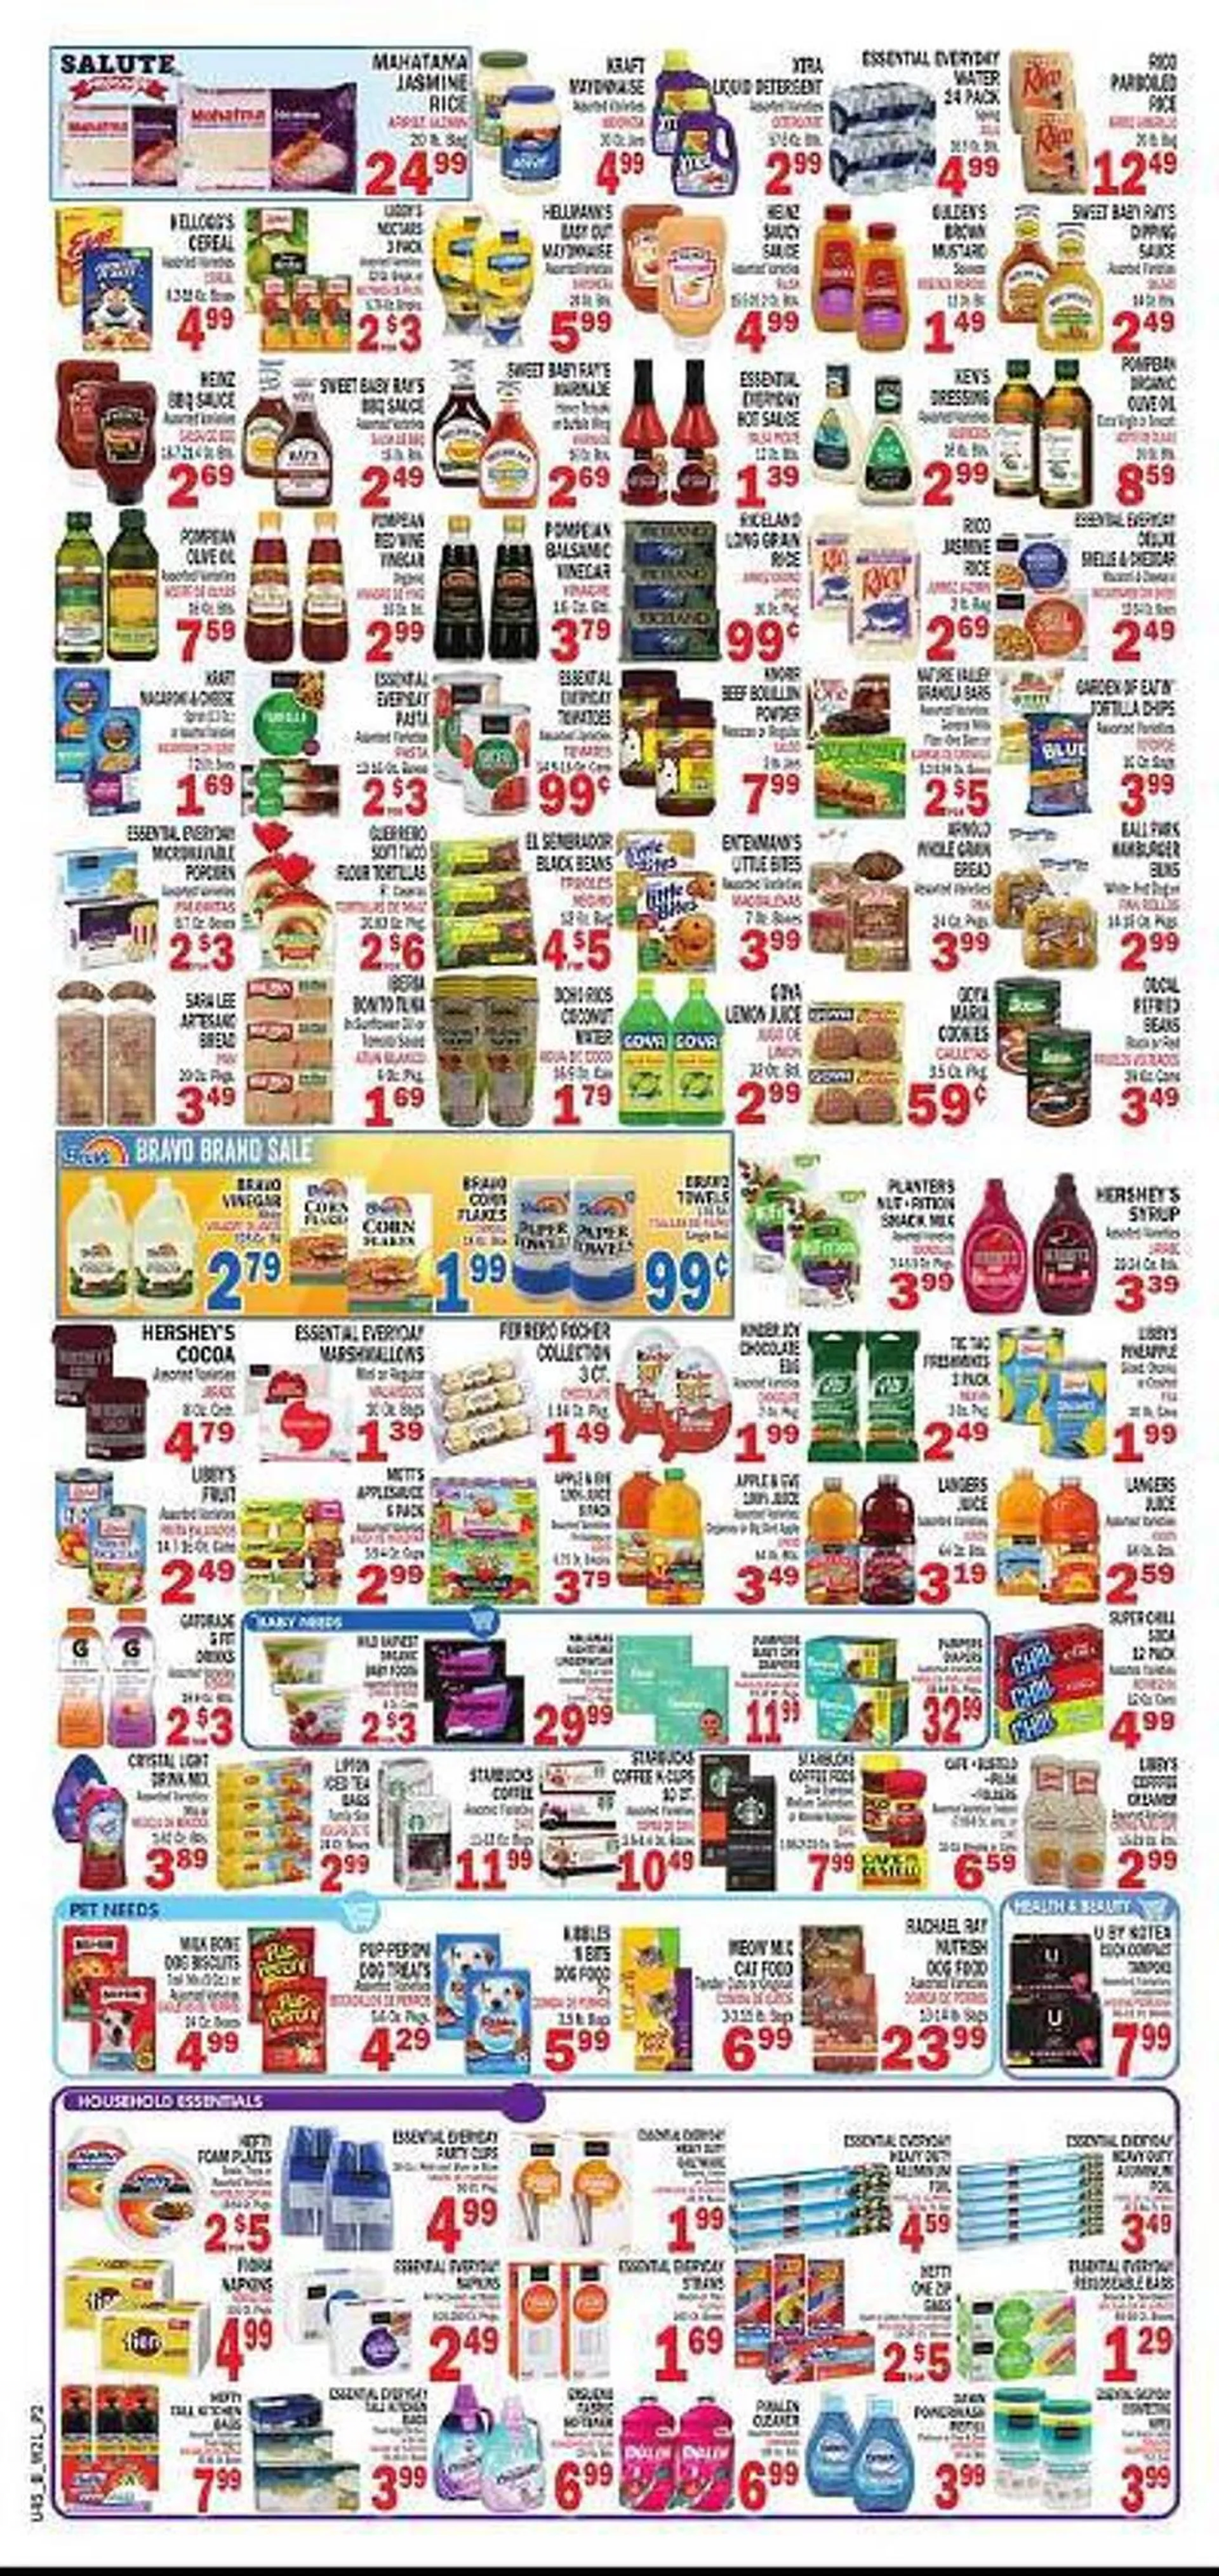 Bravo Supermarkets ad - 2